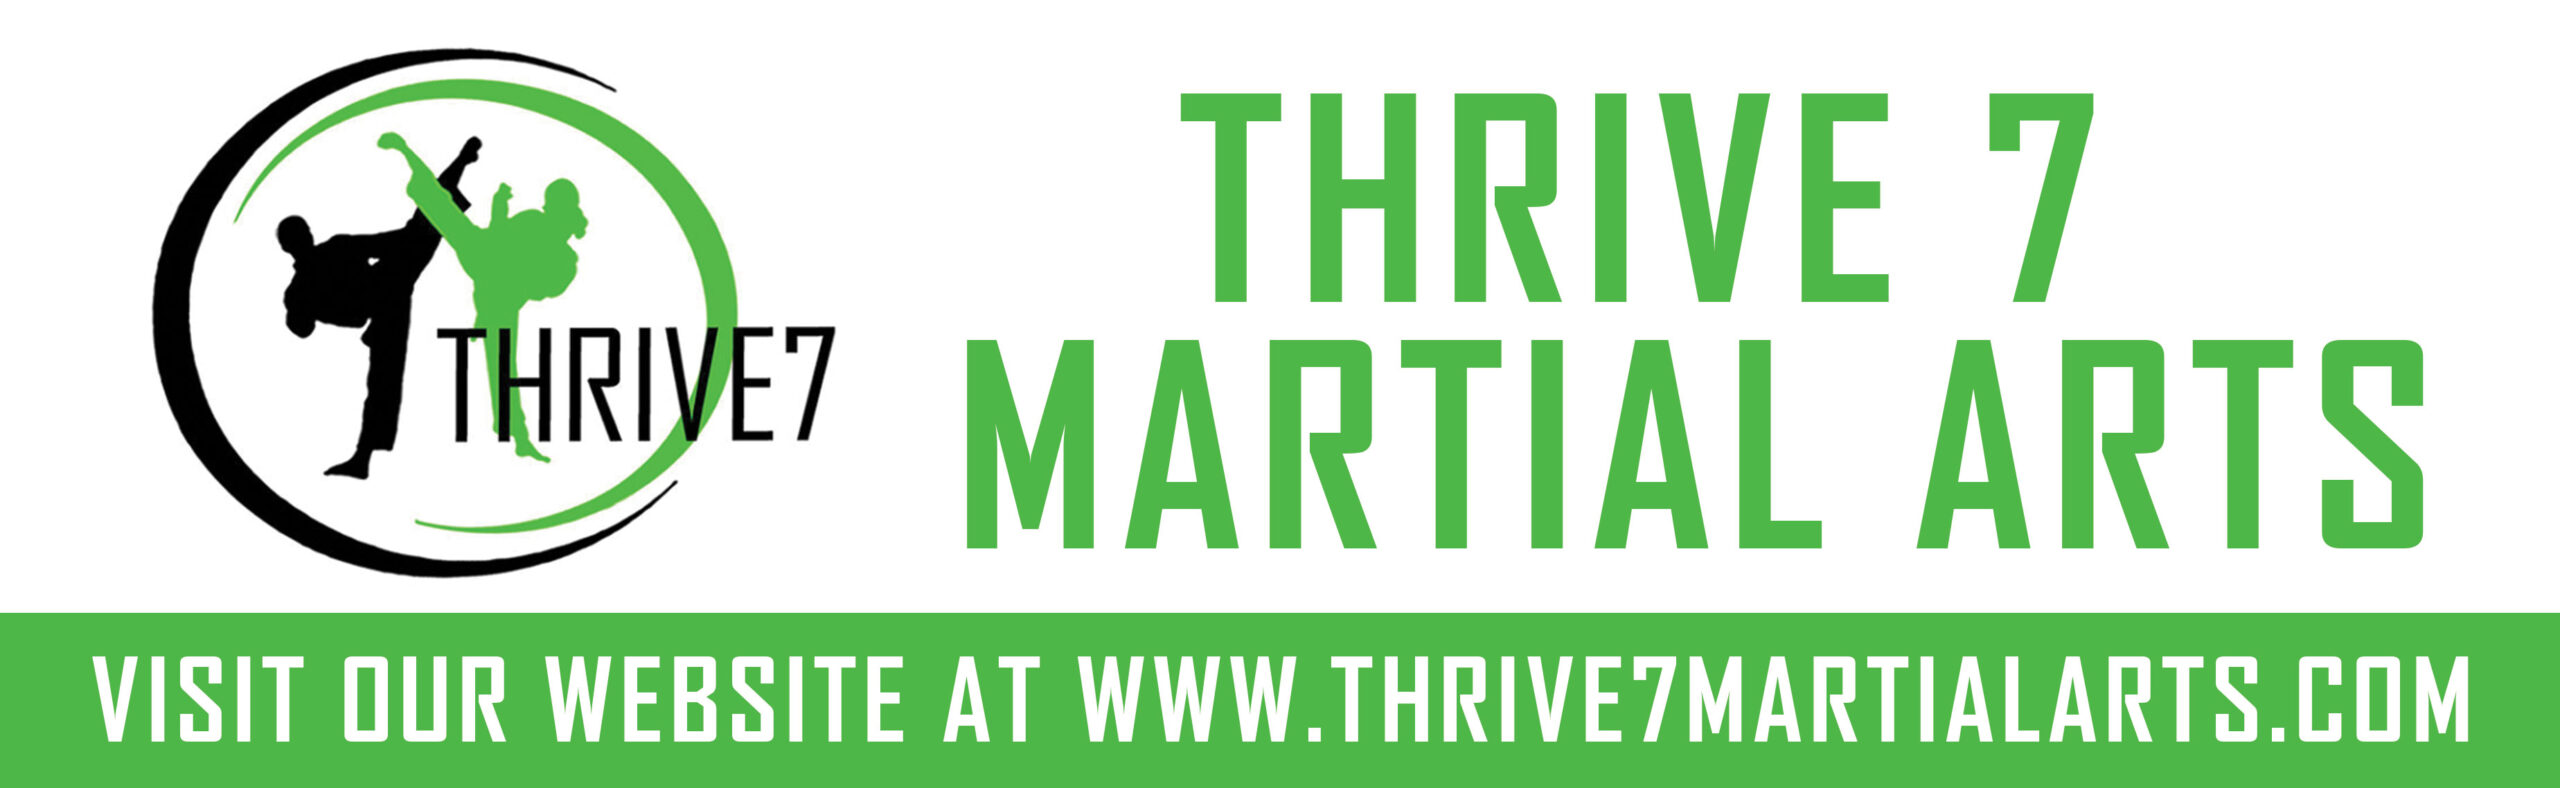 Thrive 7 Martial Arts placentia - karate